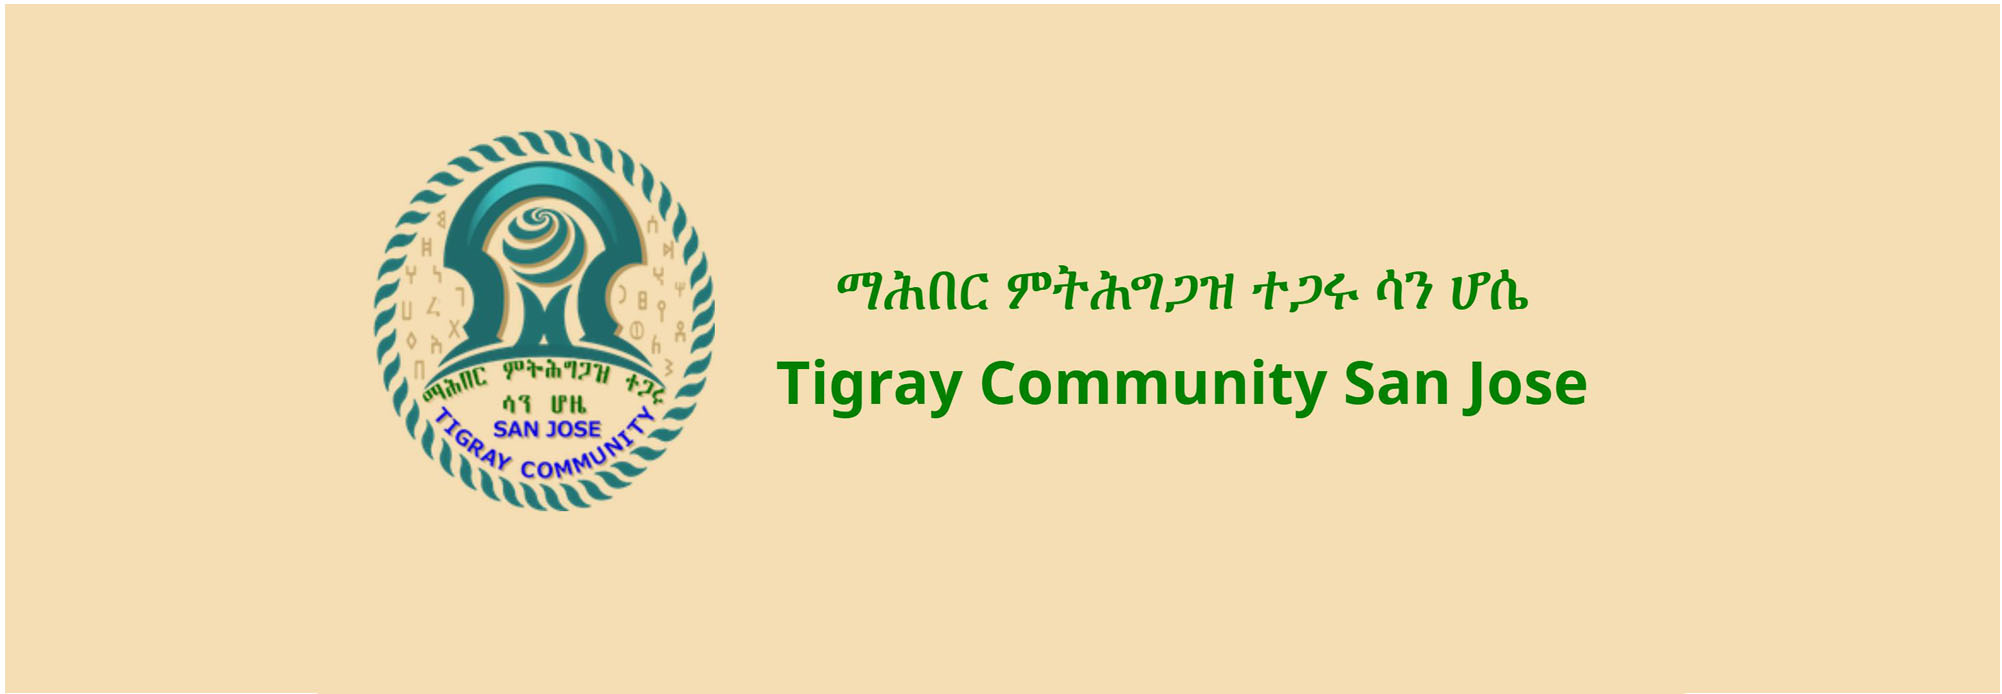 Tigray Community San Jose